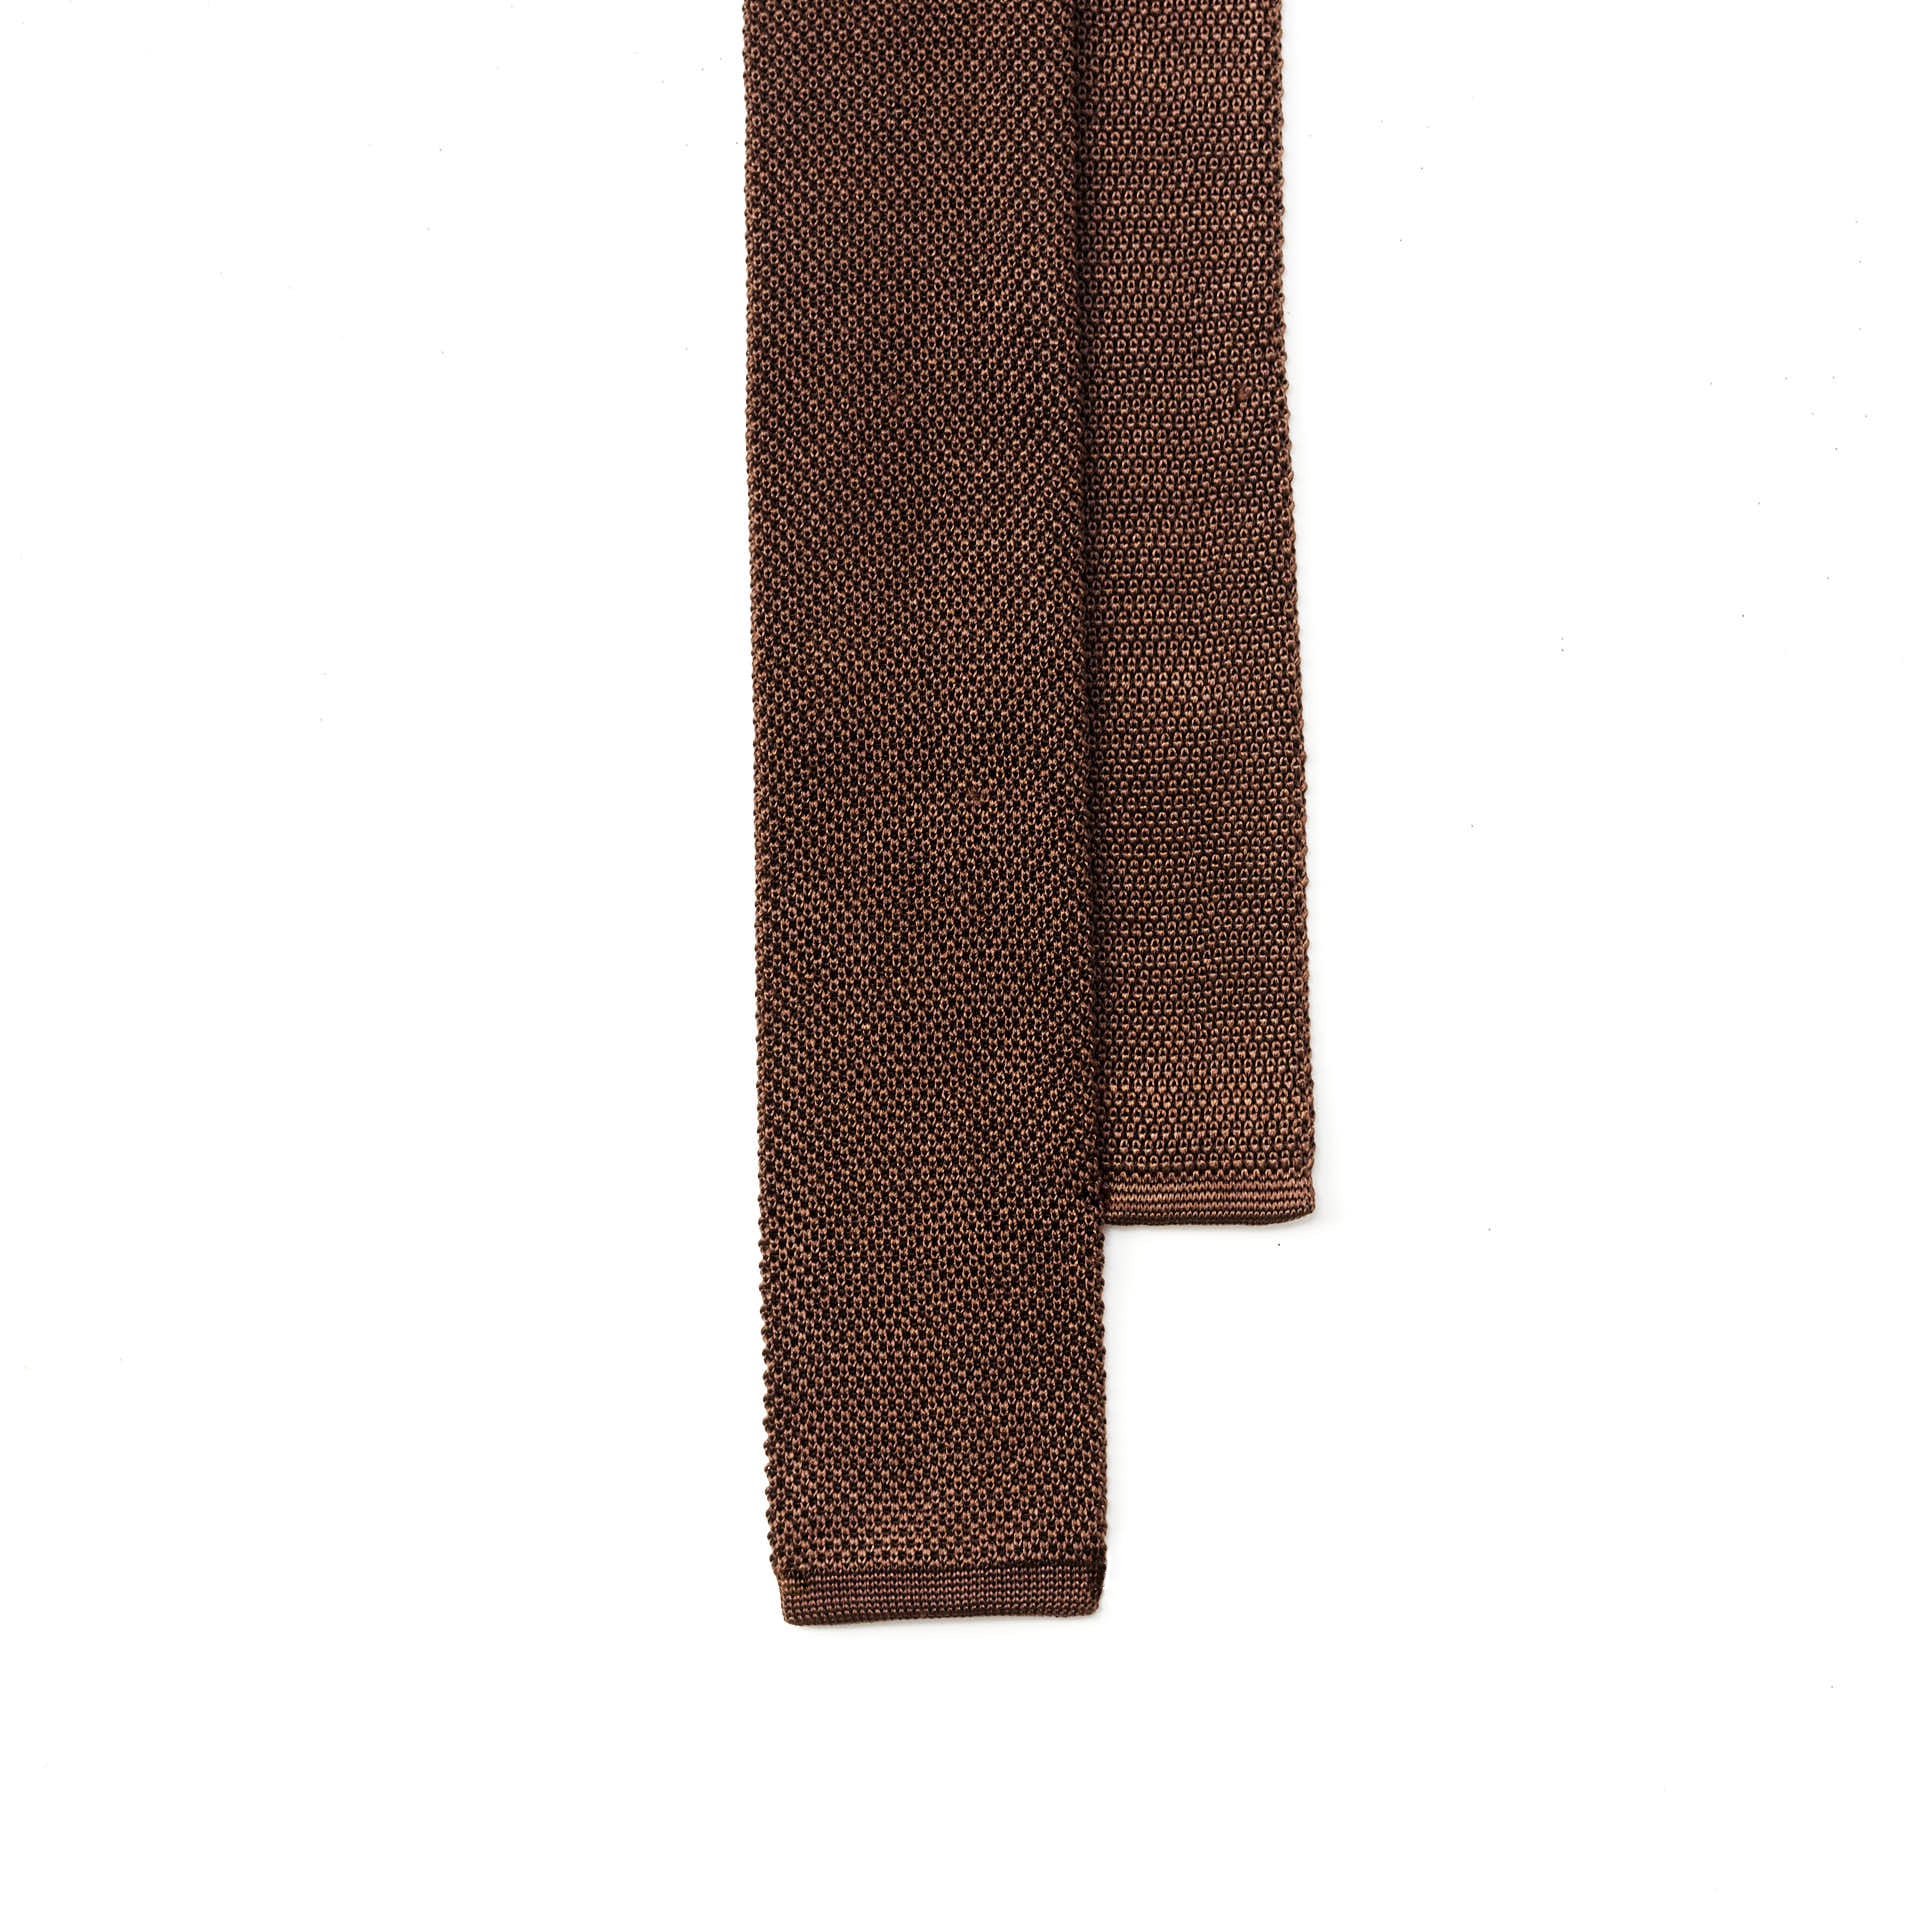 Shop Brown Silk Knit Tie | Beretta Gallery USA